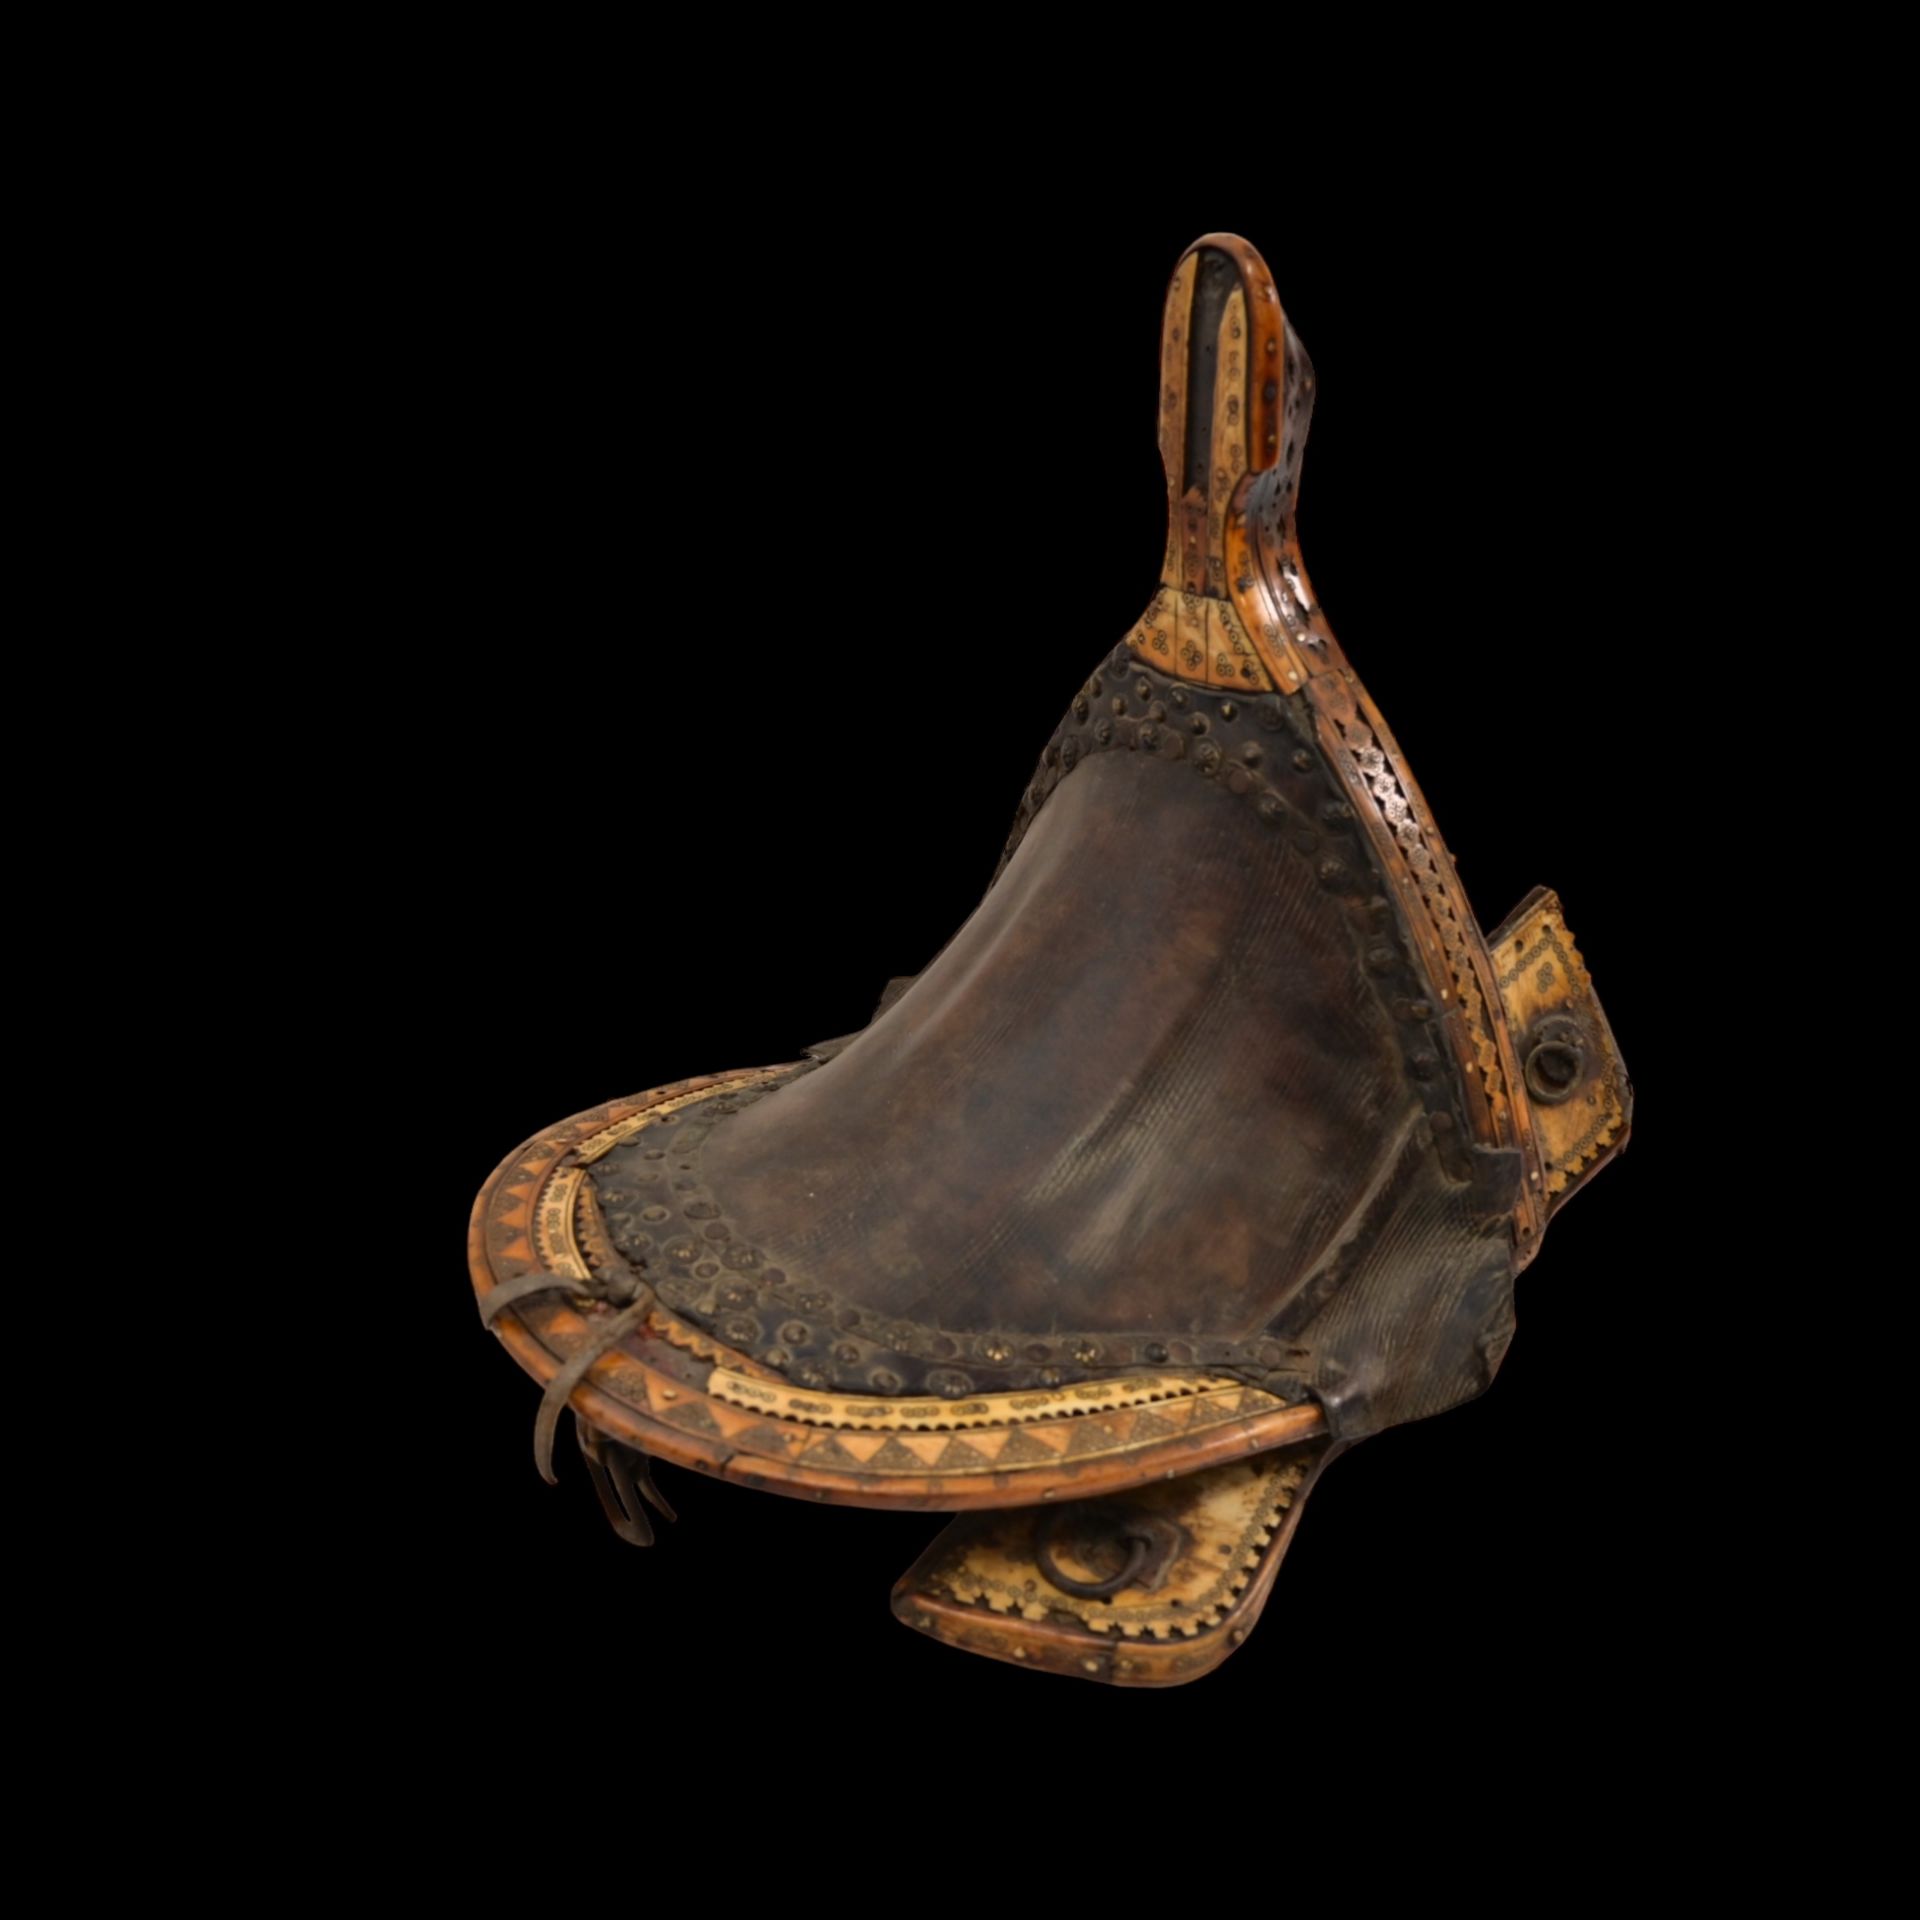 Rare antique Islamic Ottoman, Persian or Central Asia saddle for horseback, 18th century. - Image 2 of 12